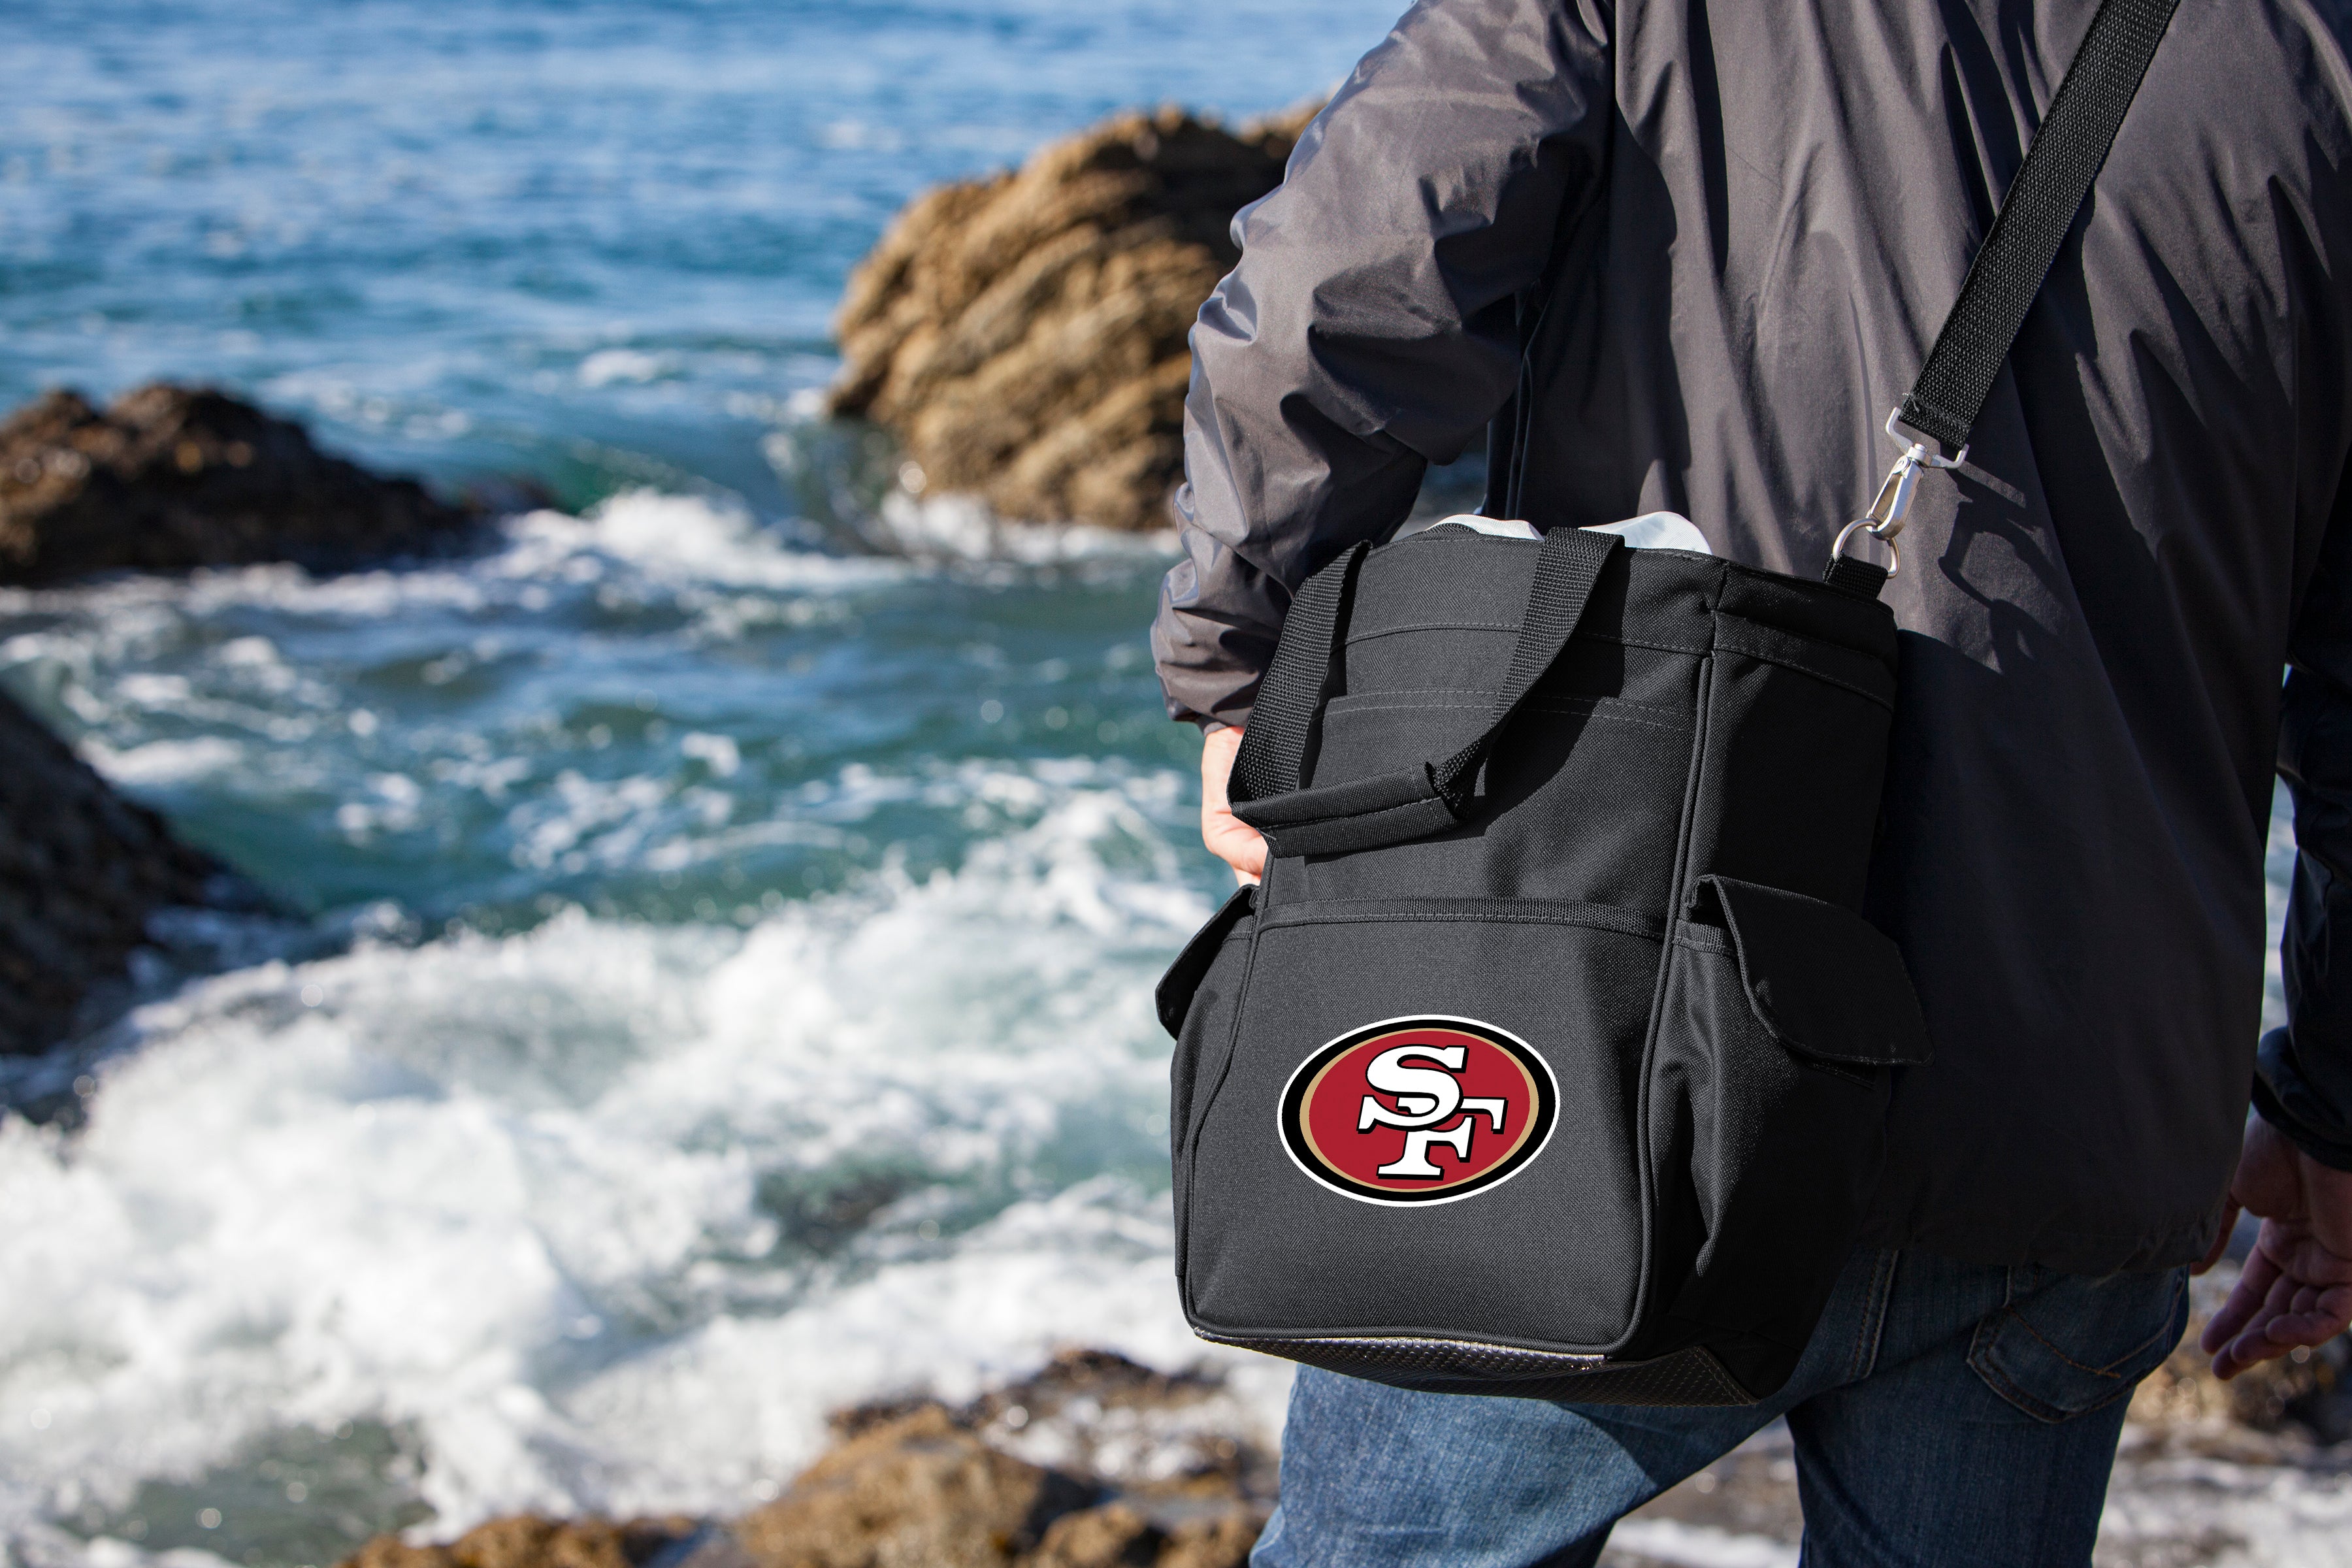 San Francisco 49ers - Activo Cooler Tote Bag